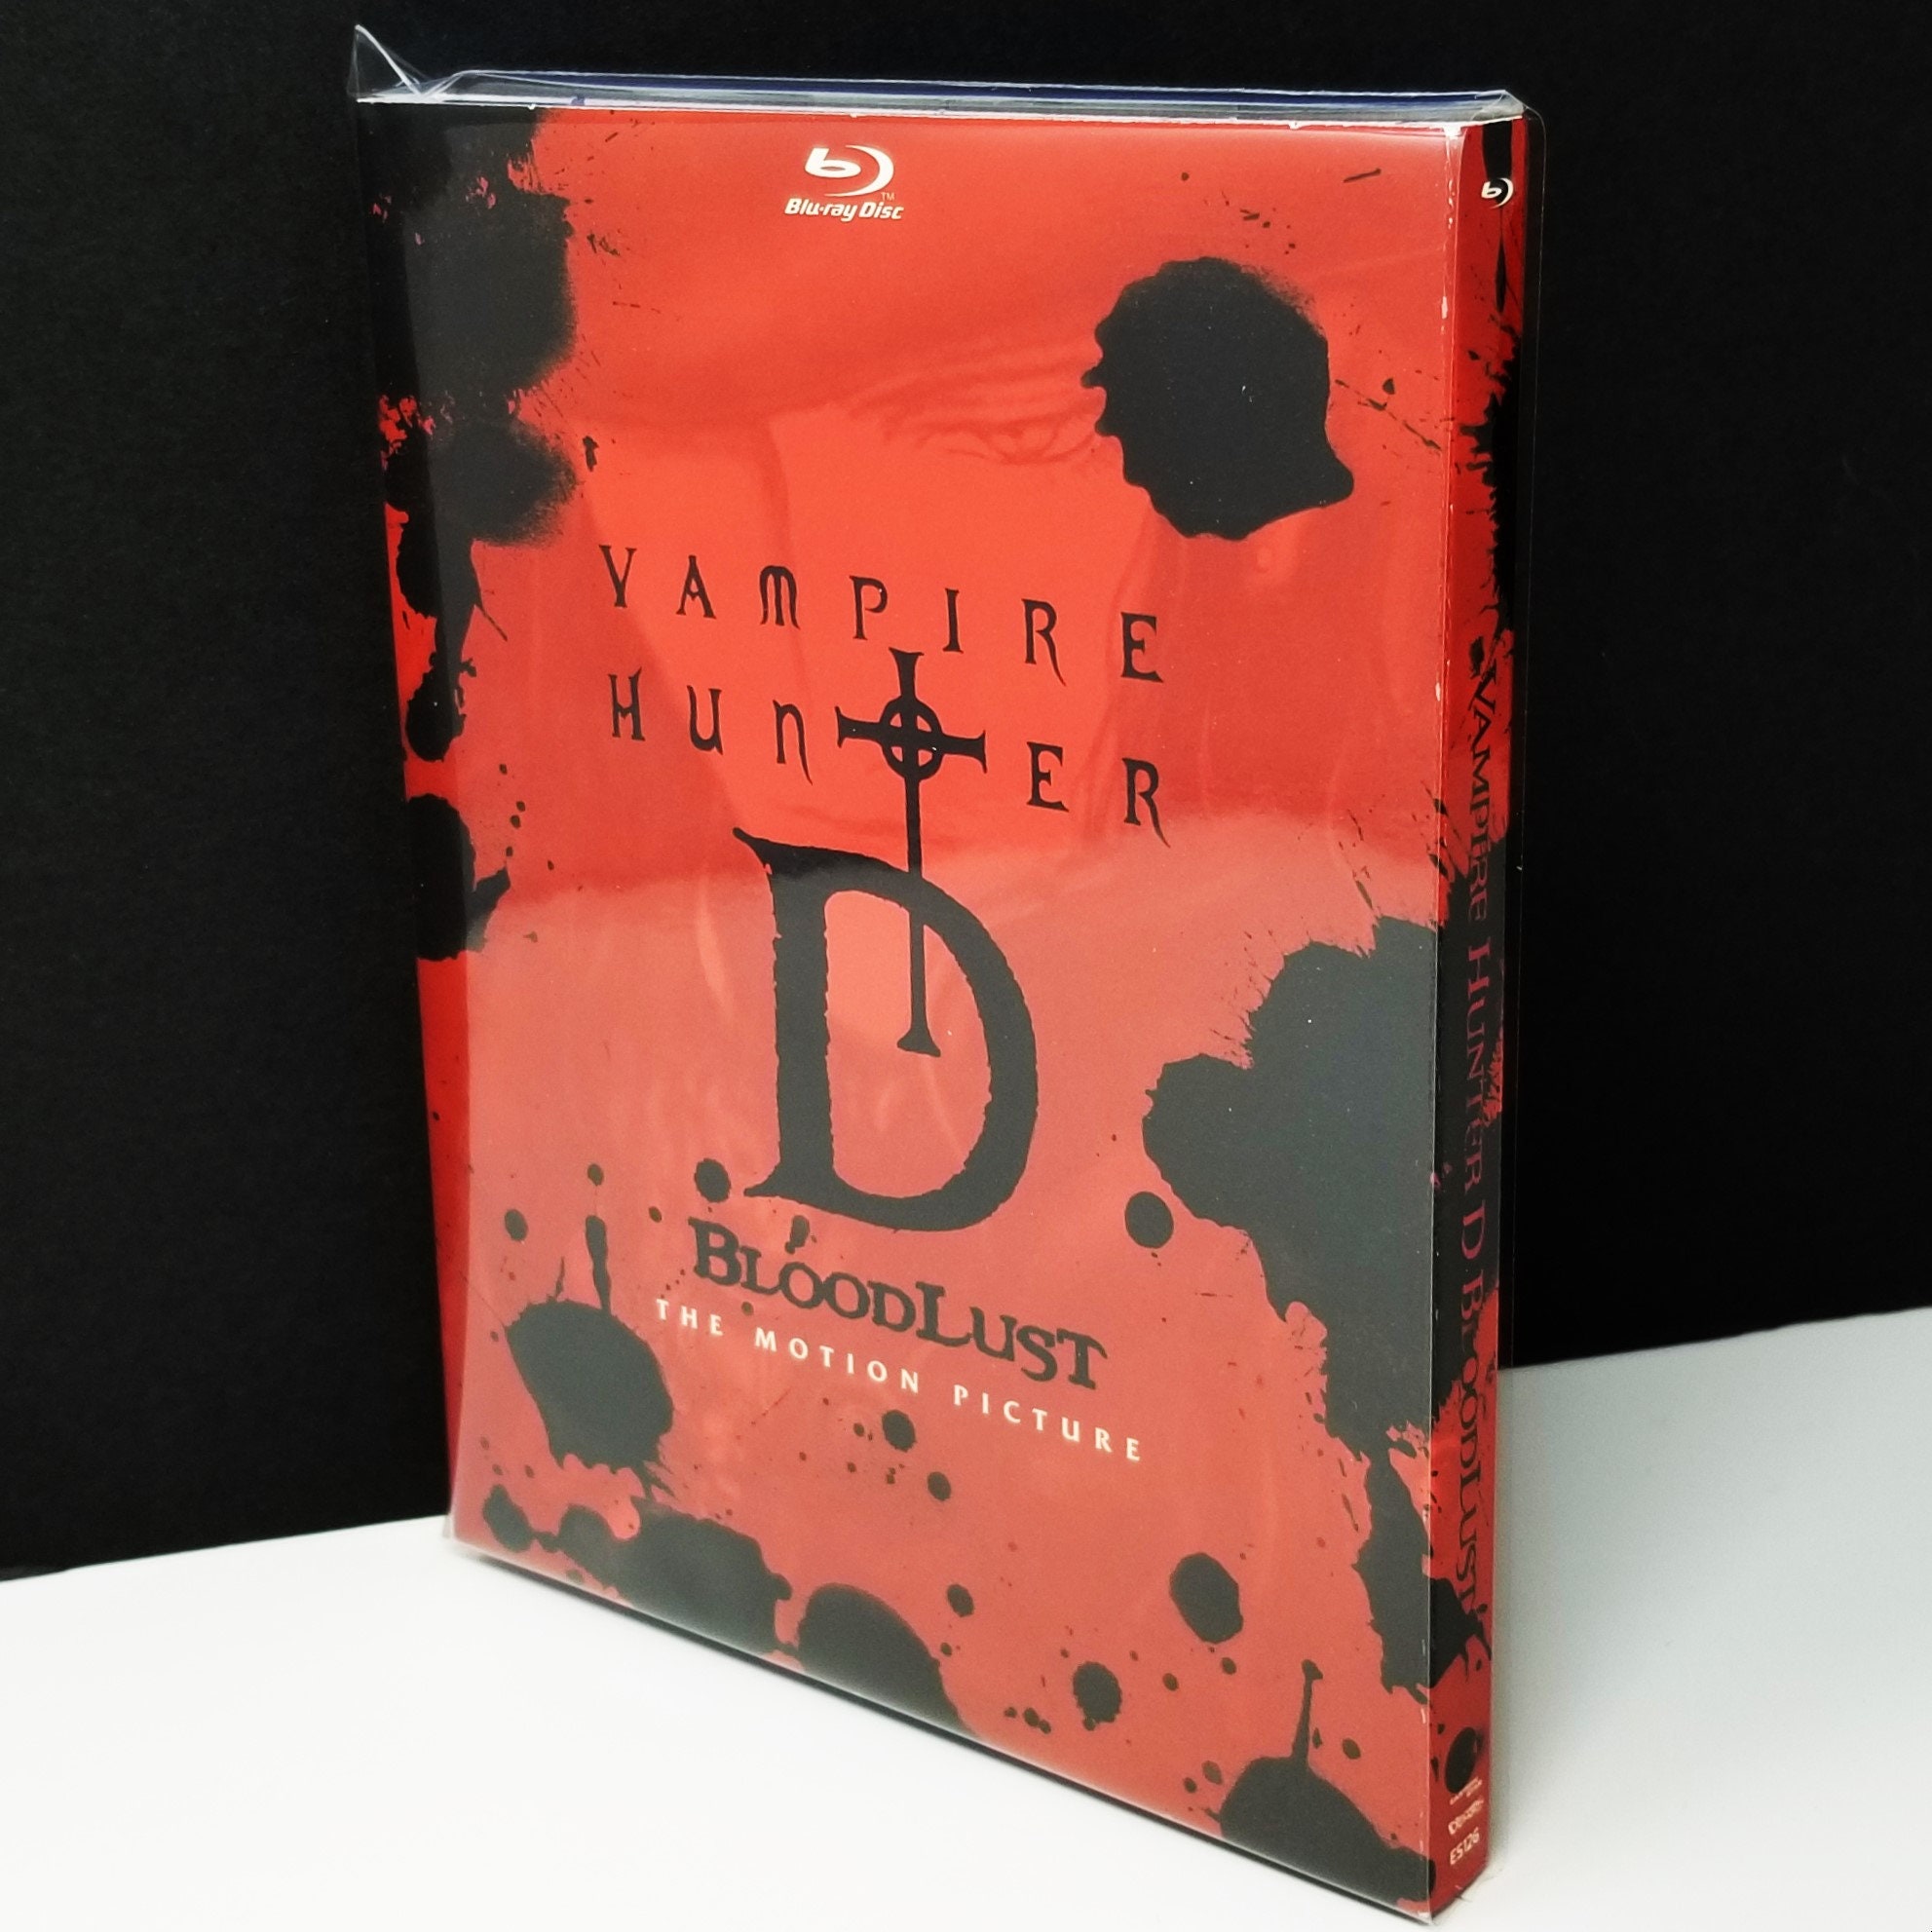 Vampire Hunter D: Bloodlust (UK IMPORT) [DVD][Region B/2] NEW